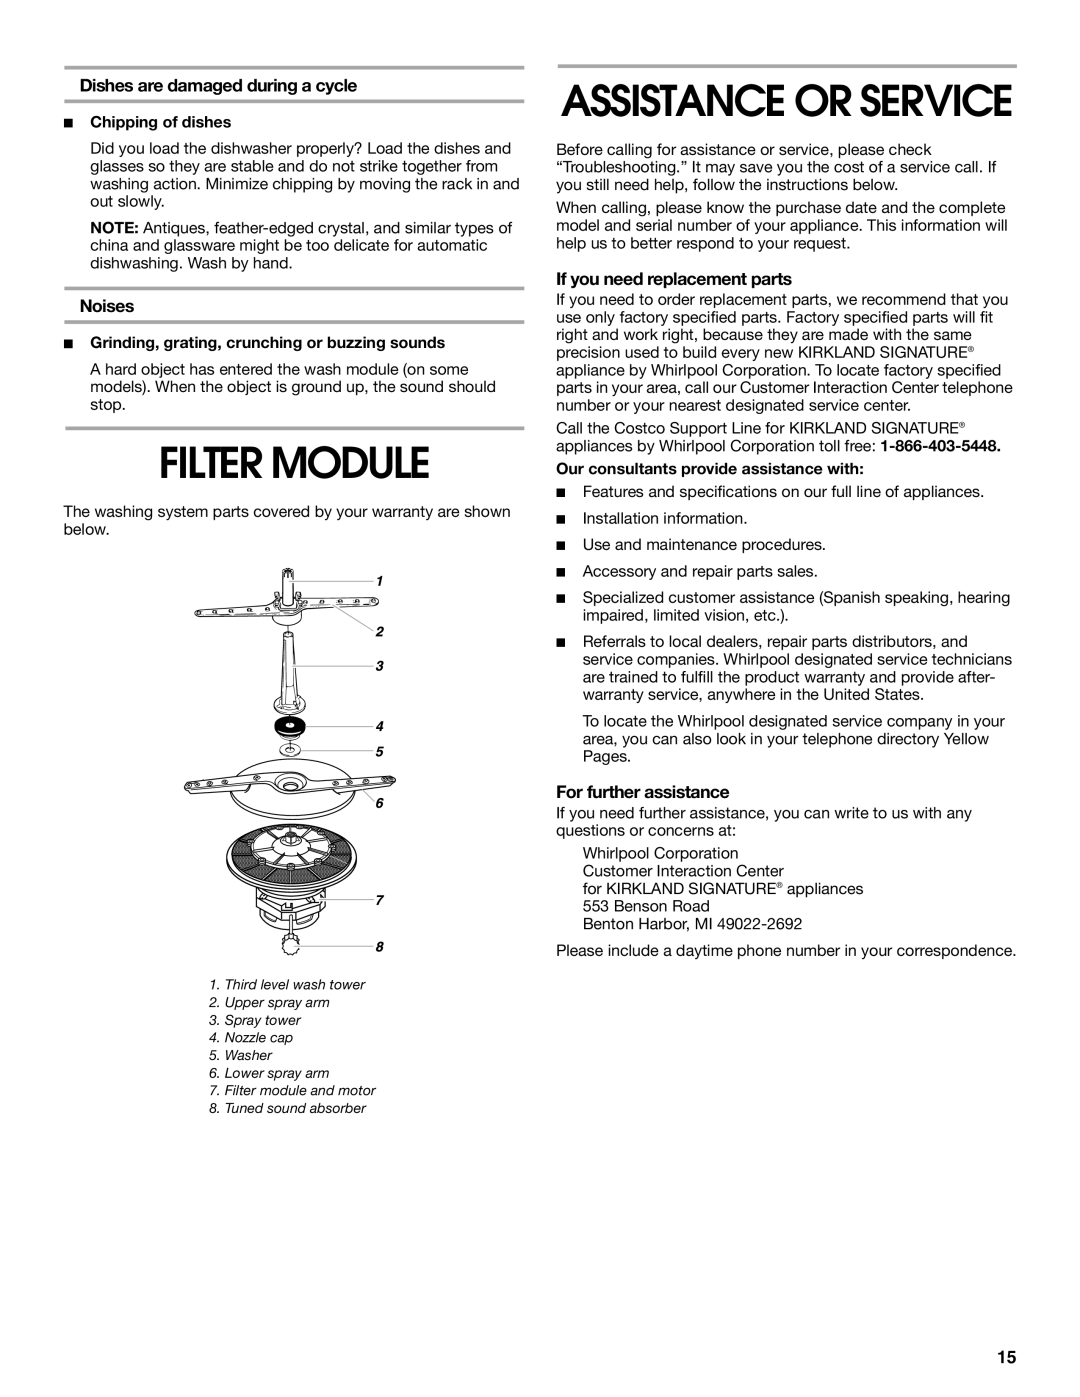 Whirlpool SUD5100 manual Filter Module, Assistance Or Service 